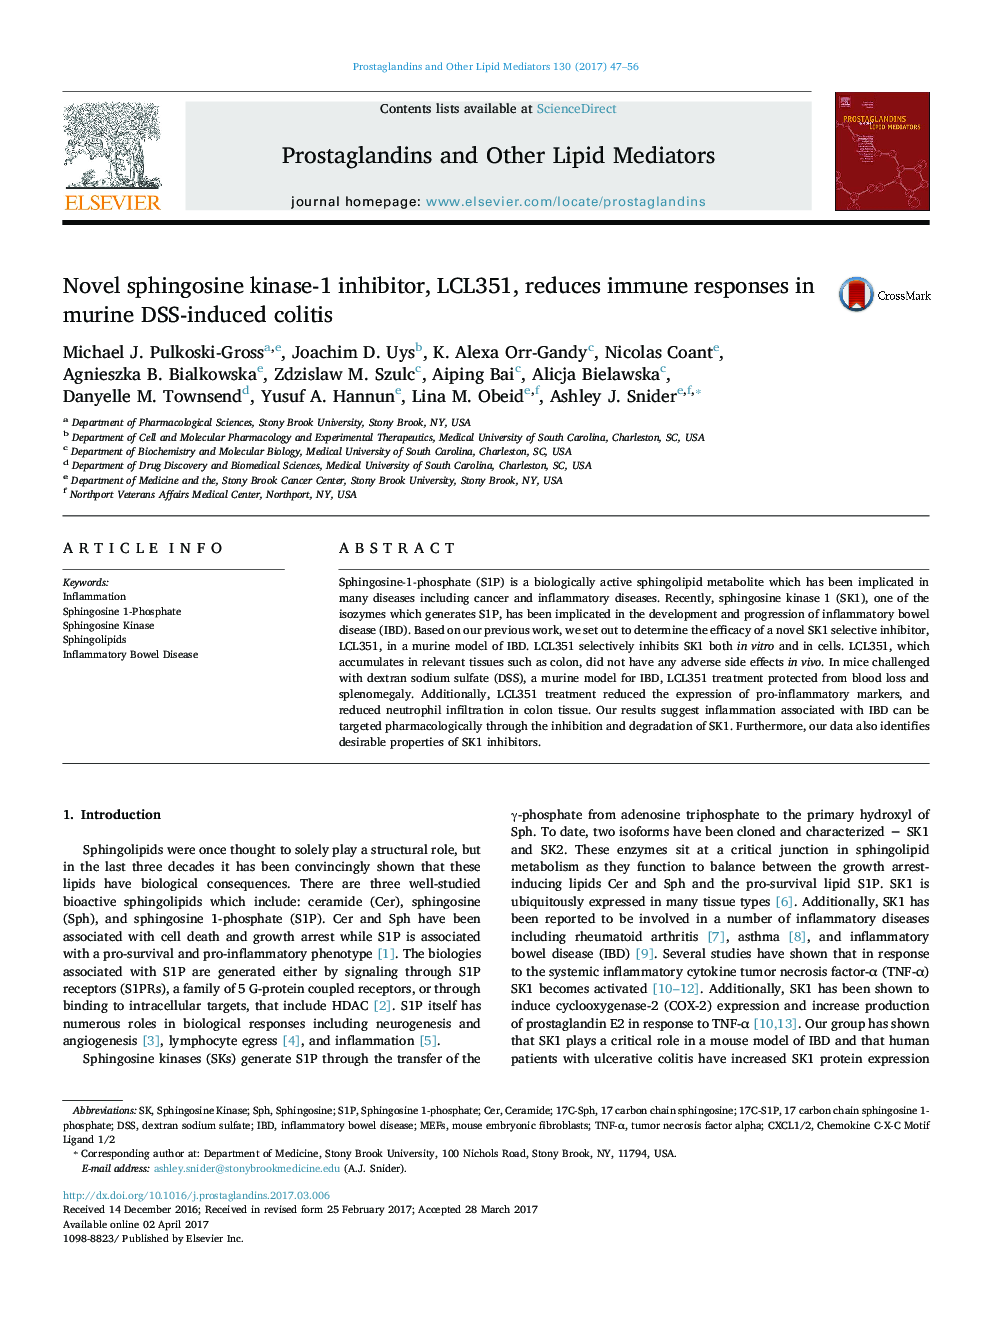 Novel sphingosine kinase-1 inhibitor, LCL351, reduces immune responses in murine DSS-induced colitis